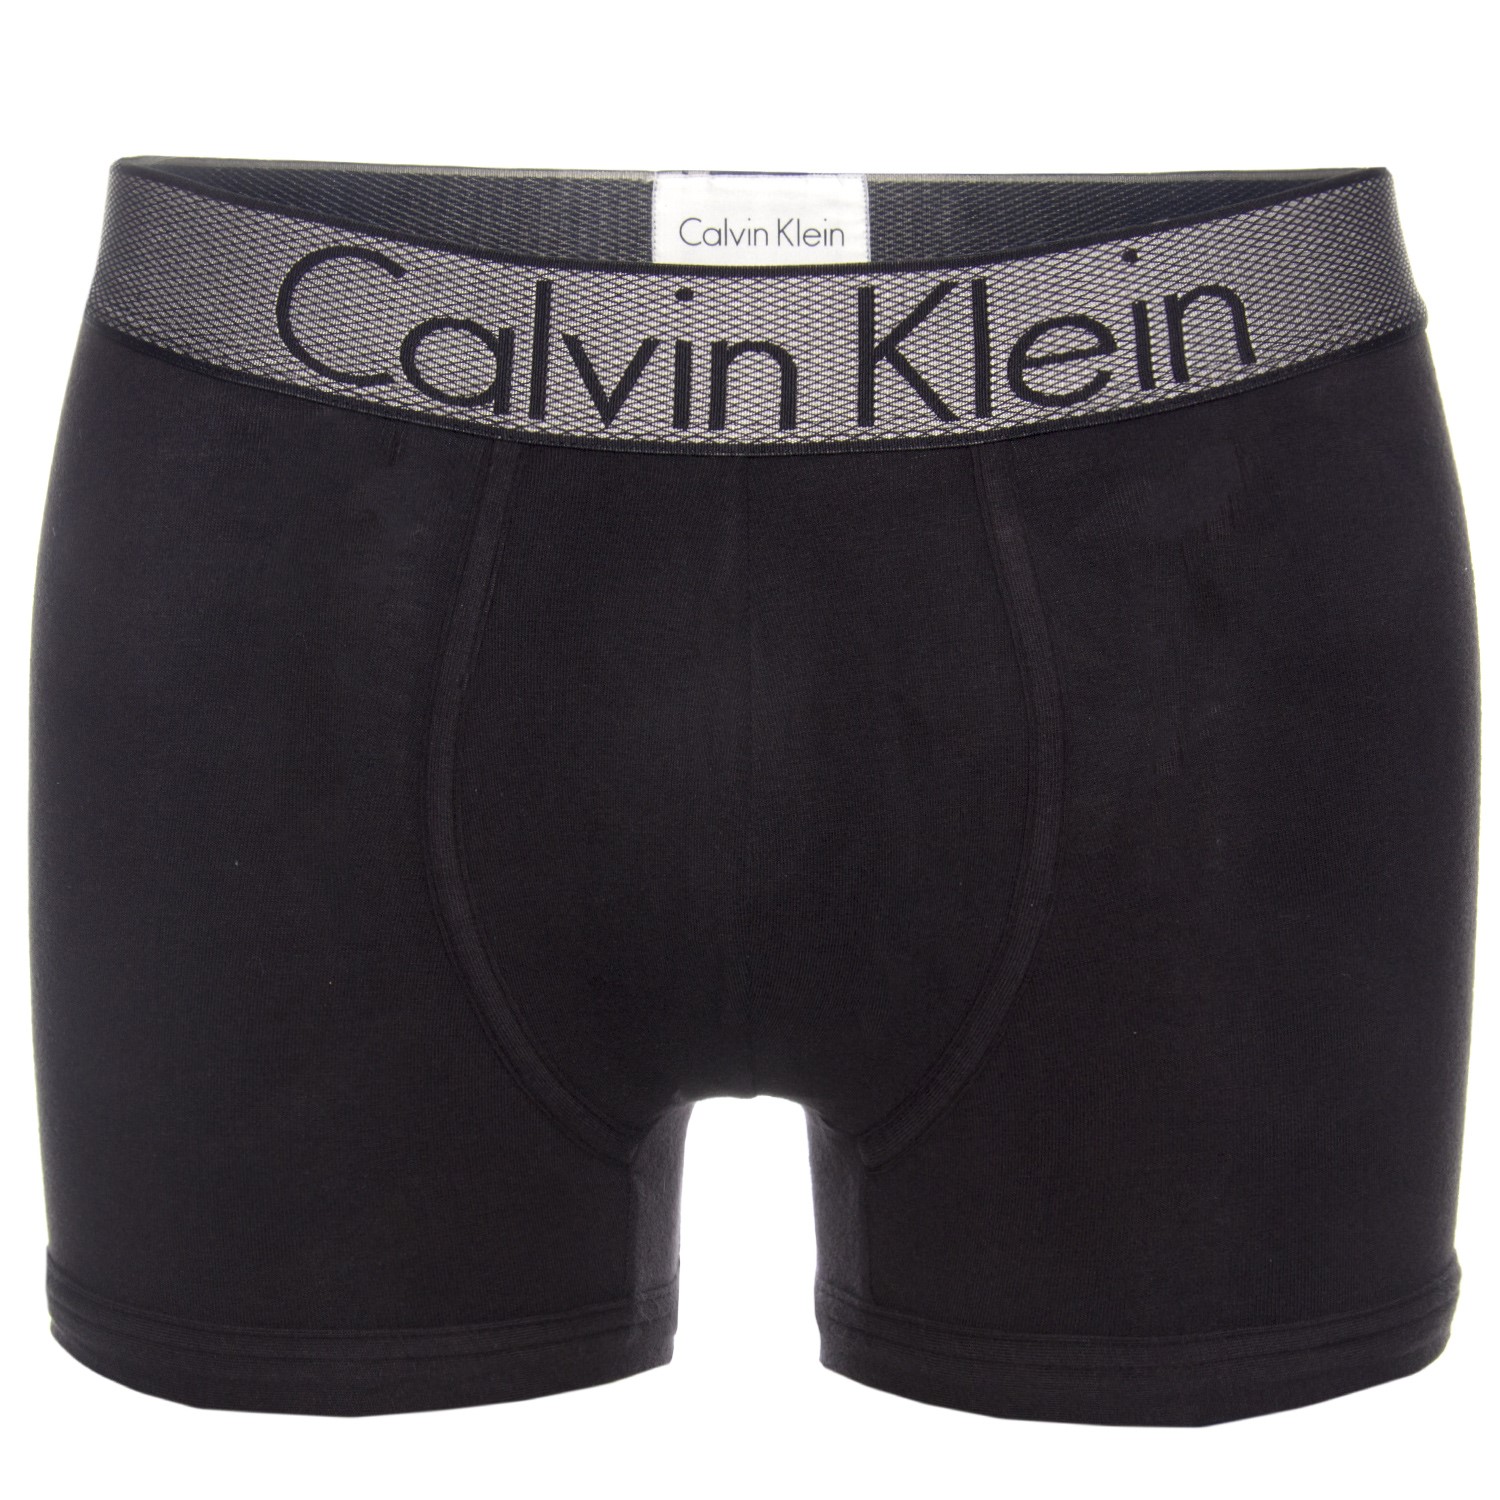 Calvin Klein Customized Stretch Cotton Trunk